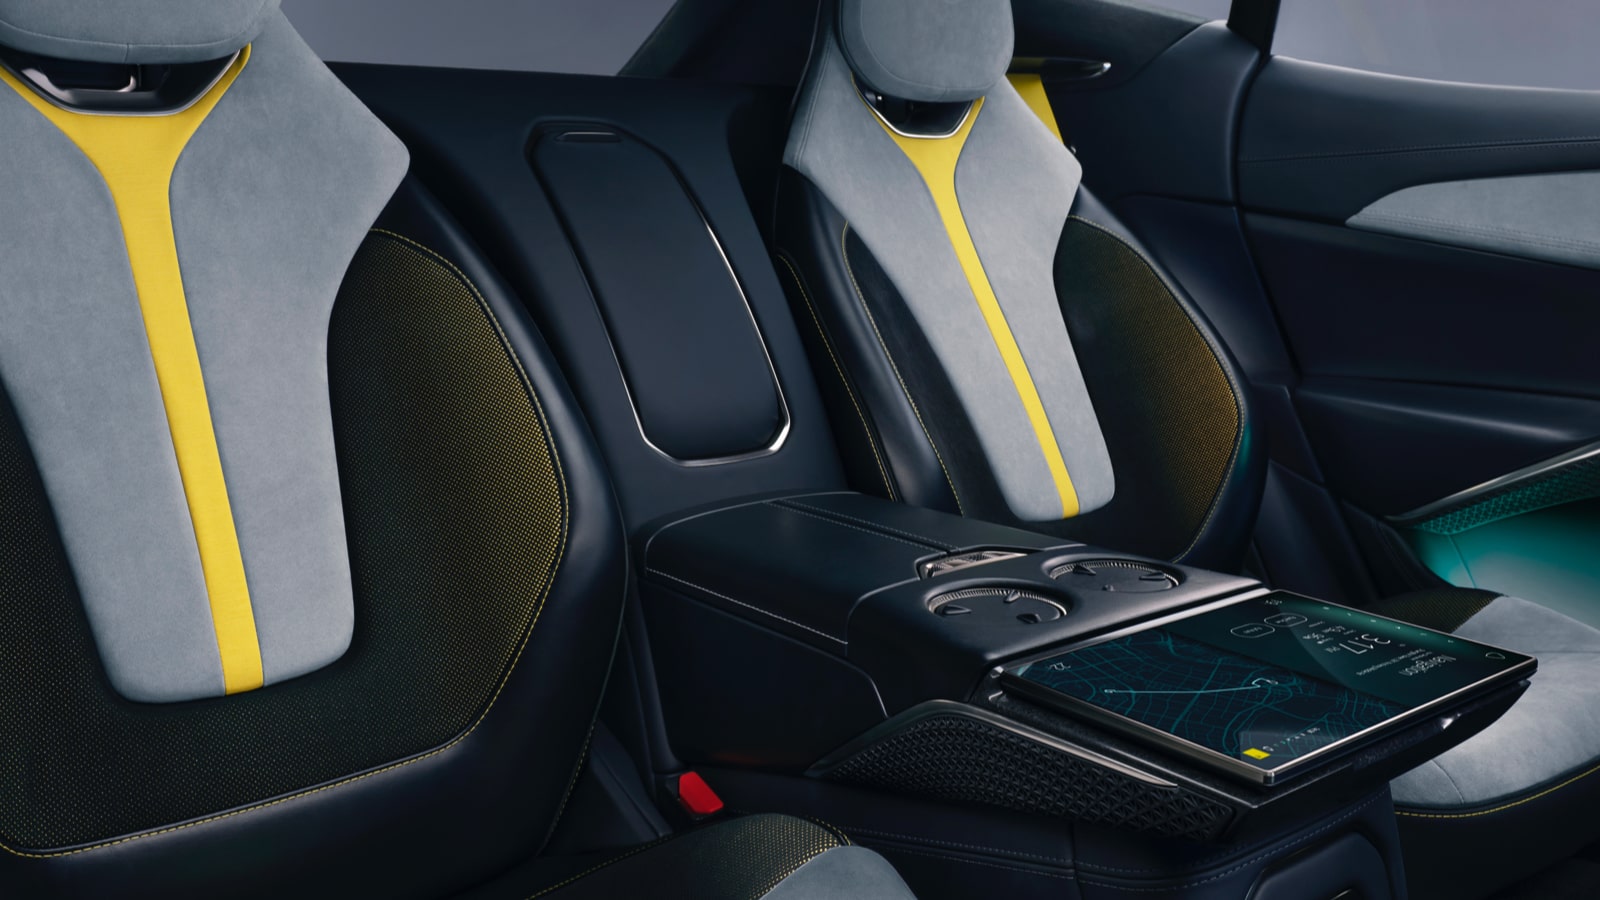 Lotus Eletre center console digital display between the rear seats